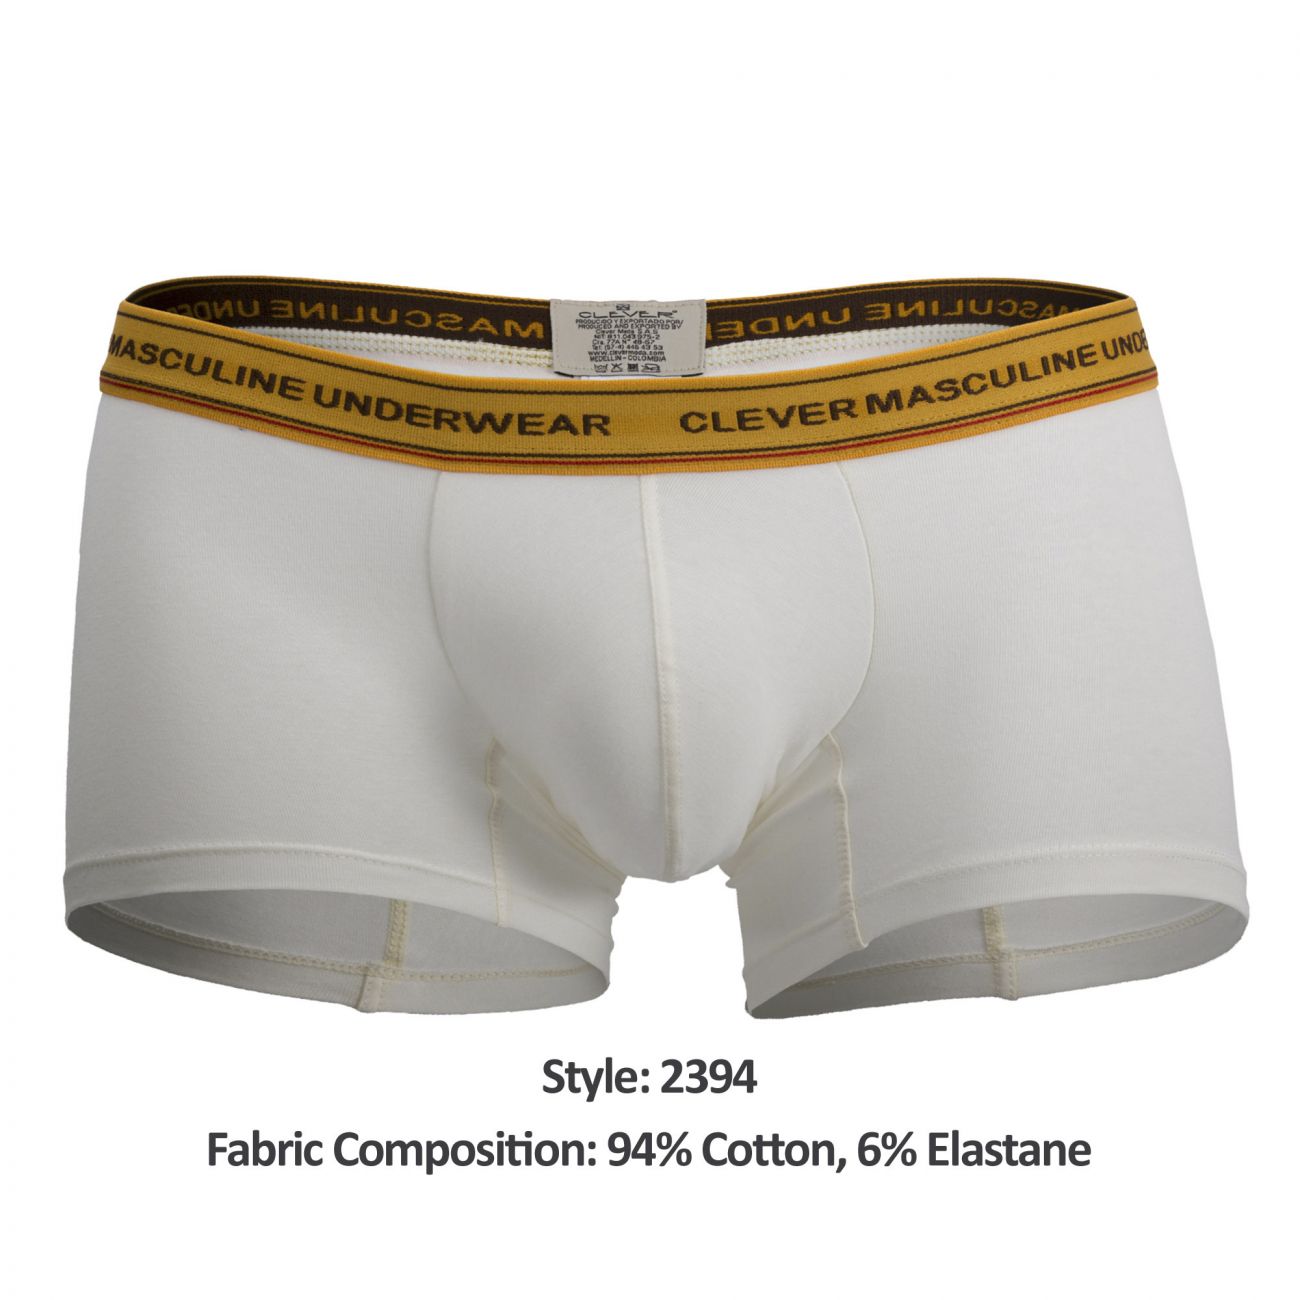 clever men's underwear